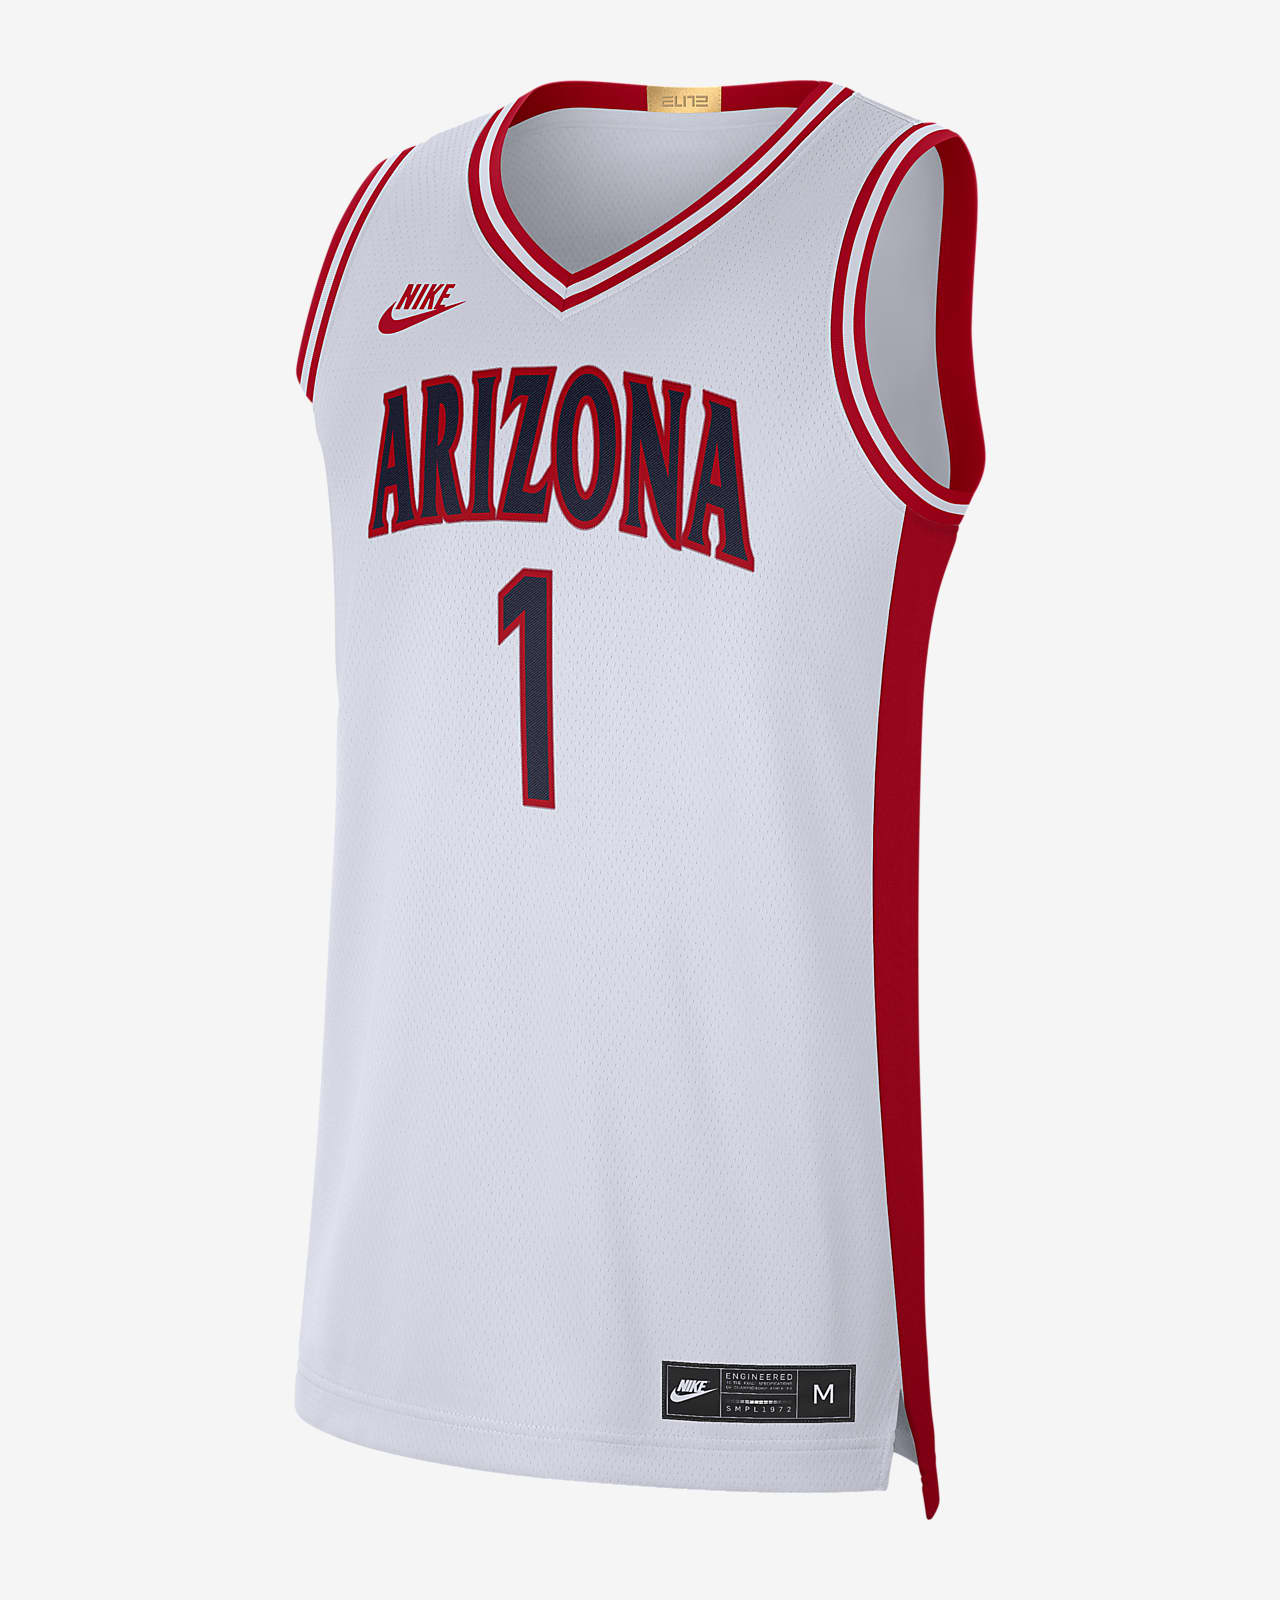 Jersey de básquetbol Nike Dri-FIT para hombre Arizona Limited. Nike .com